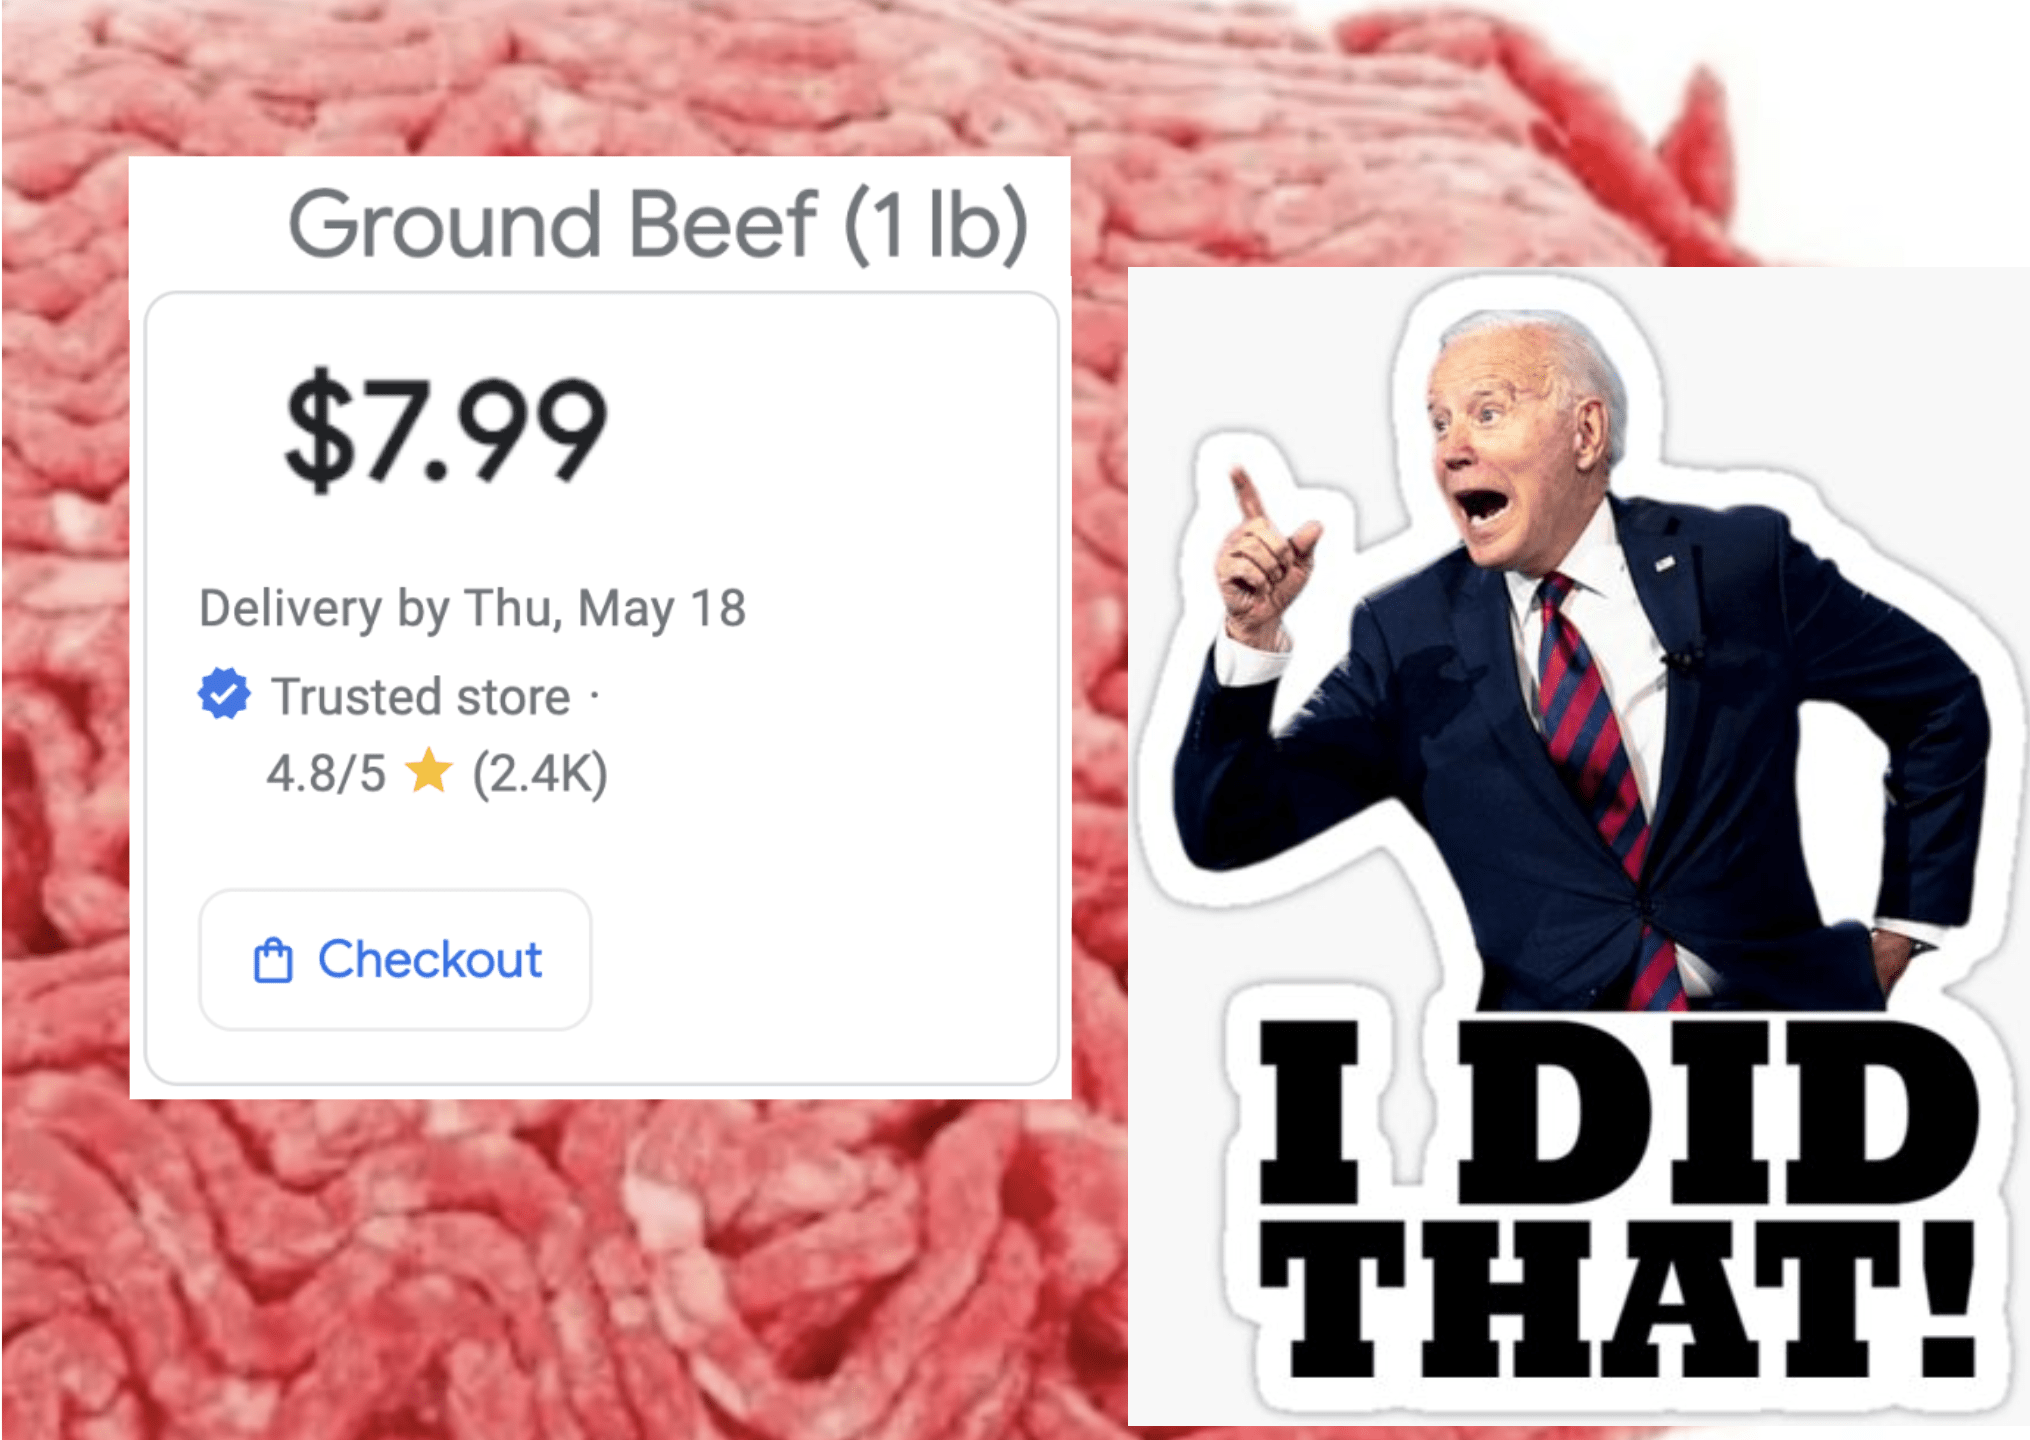 Biden pointing to $7.99 per pound ground beef price with 